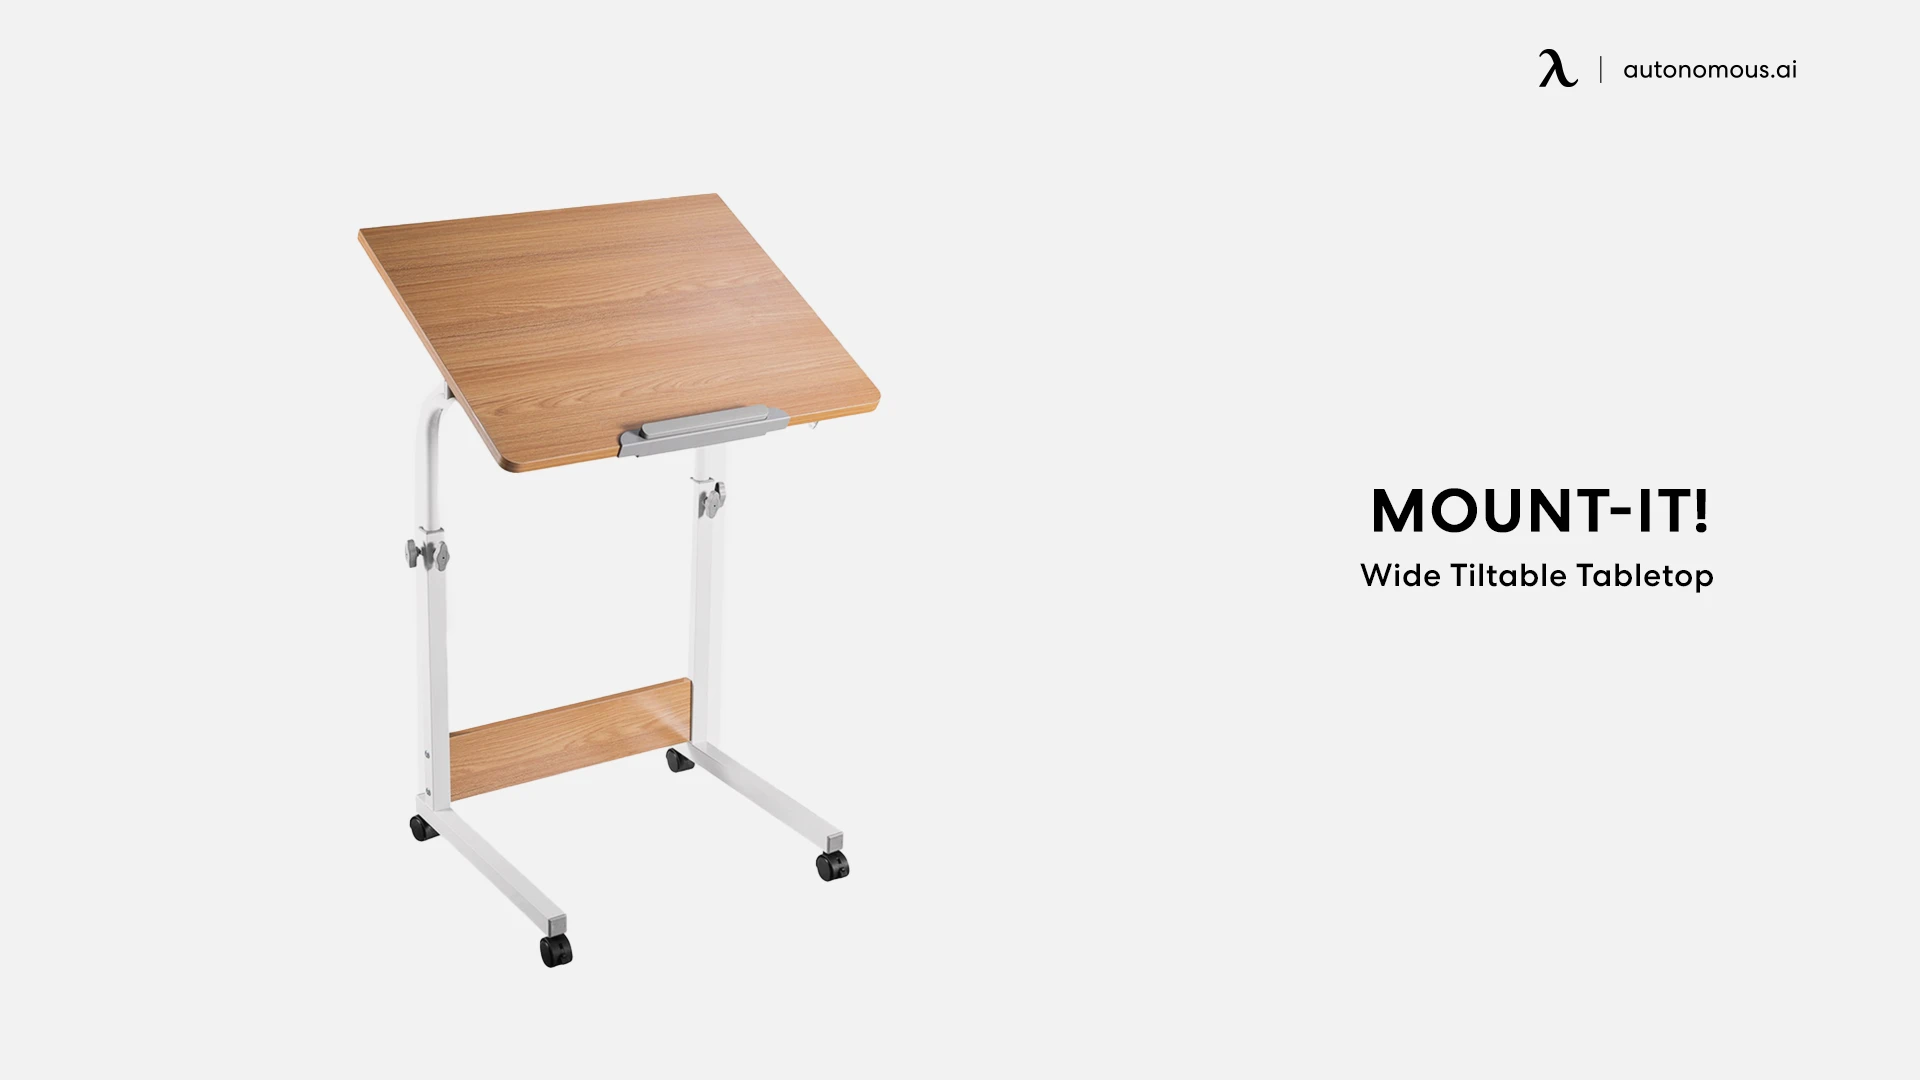 Mount-It! Rolling Desk with Tiltable Desktop